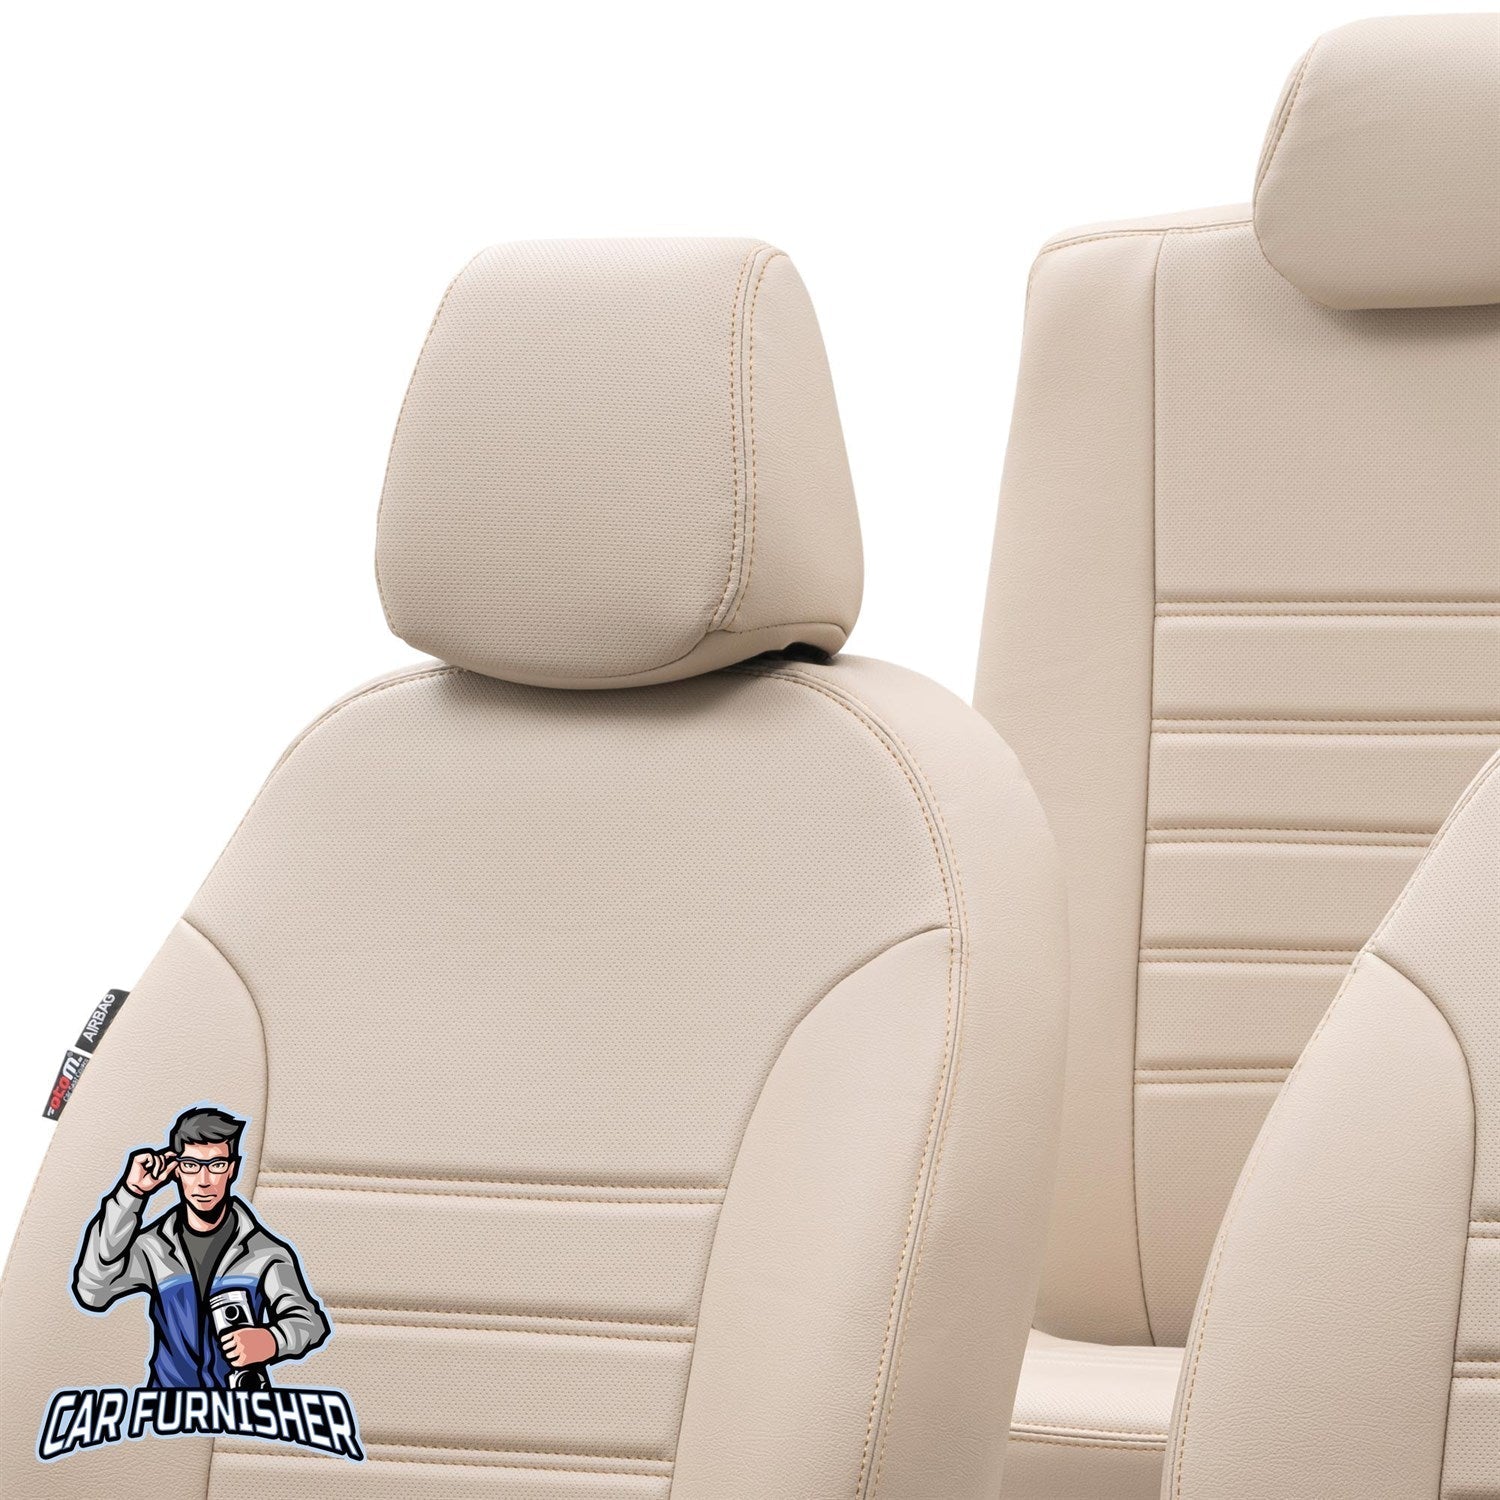 Alfa Romeo Giulietta Seat Cover Istanbul Leather Design Beige Leather